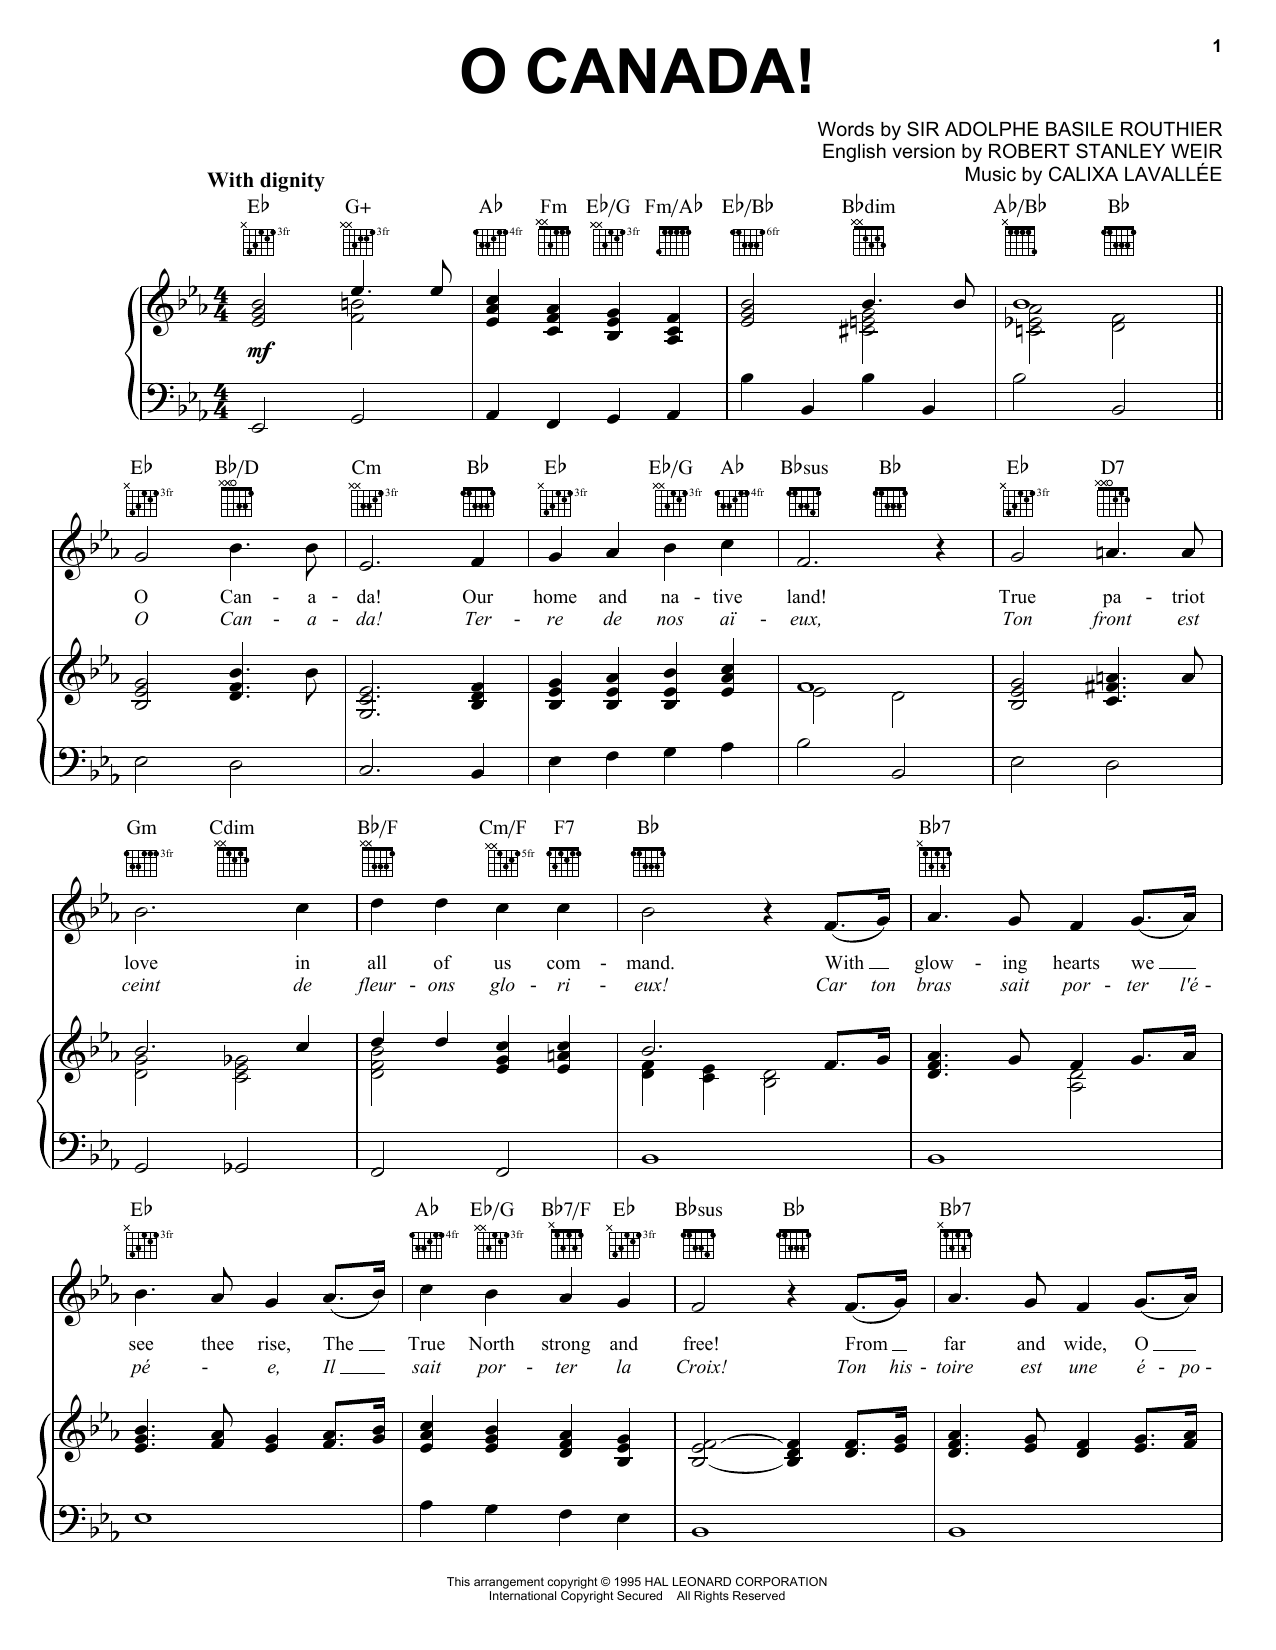 Calixa Lavallee O Canada! sheet music notes printable PDF score